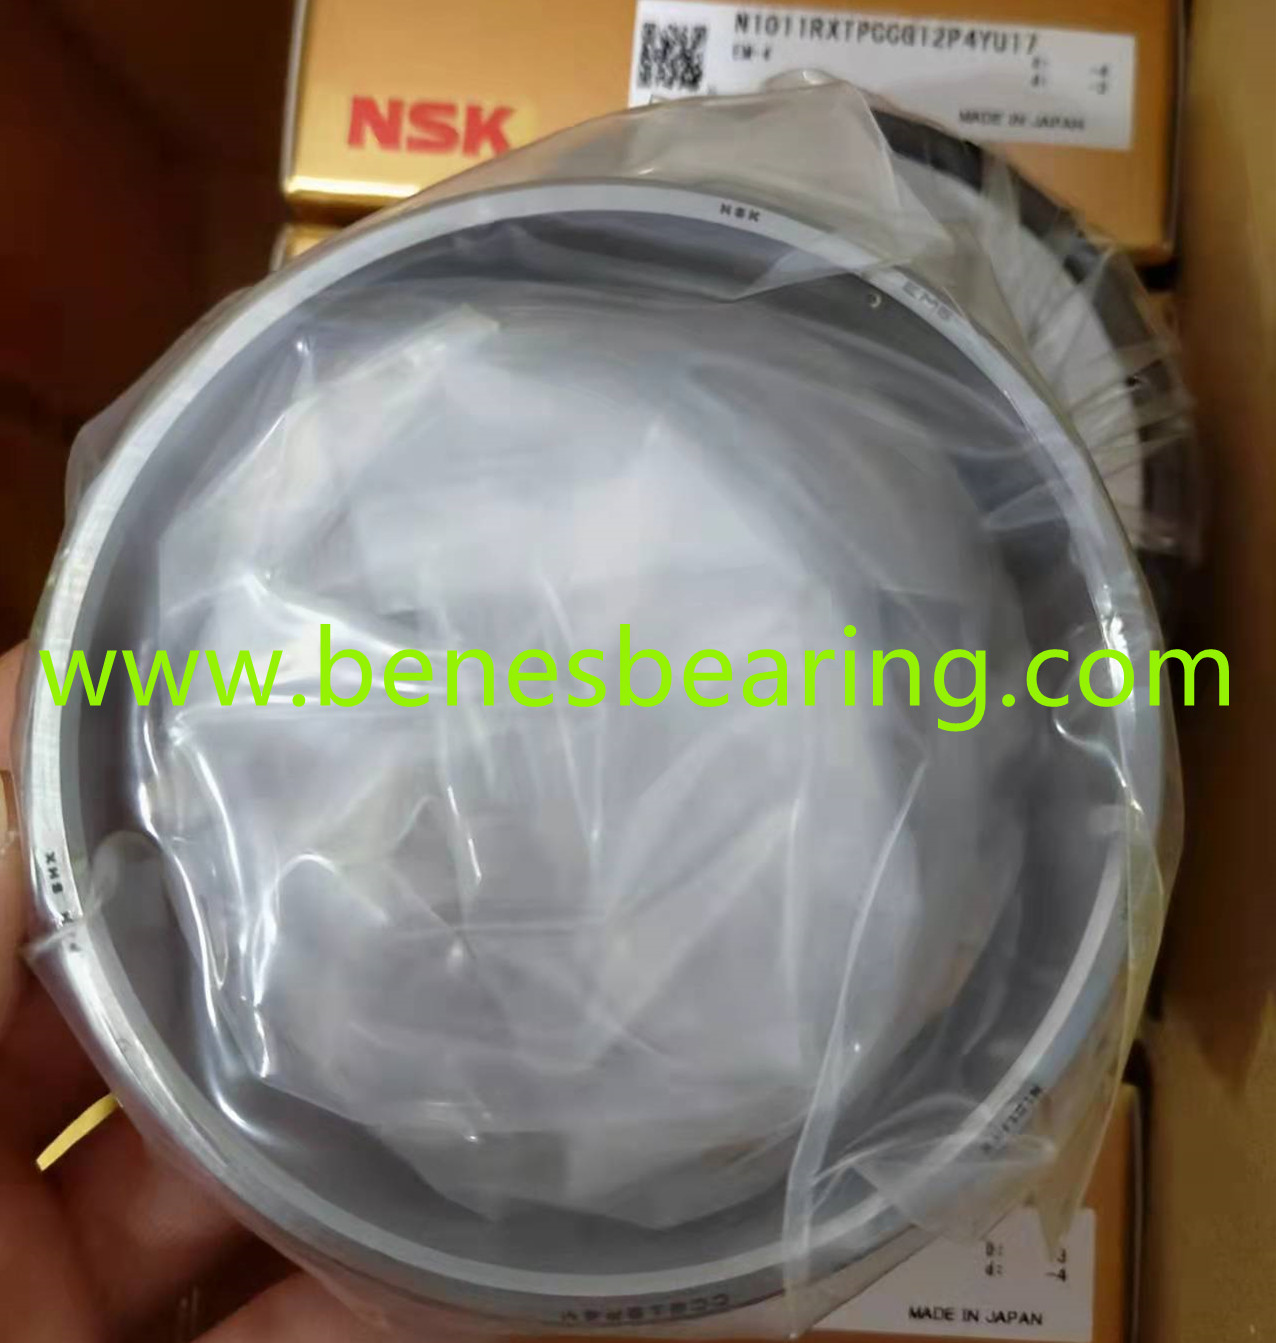 NSK N1011RXTPCCG12P4YU17   Cylindrical roller bearing